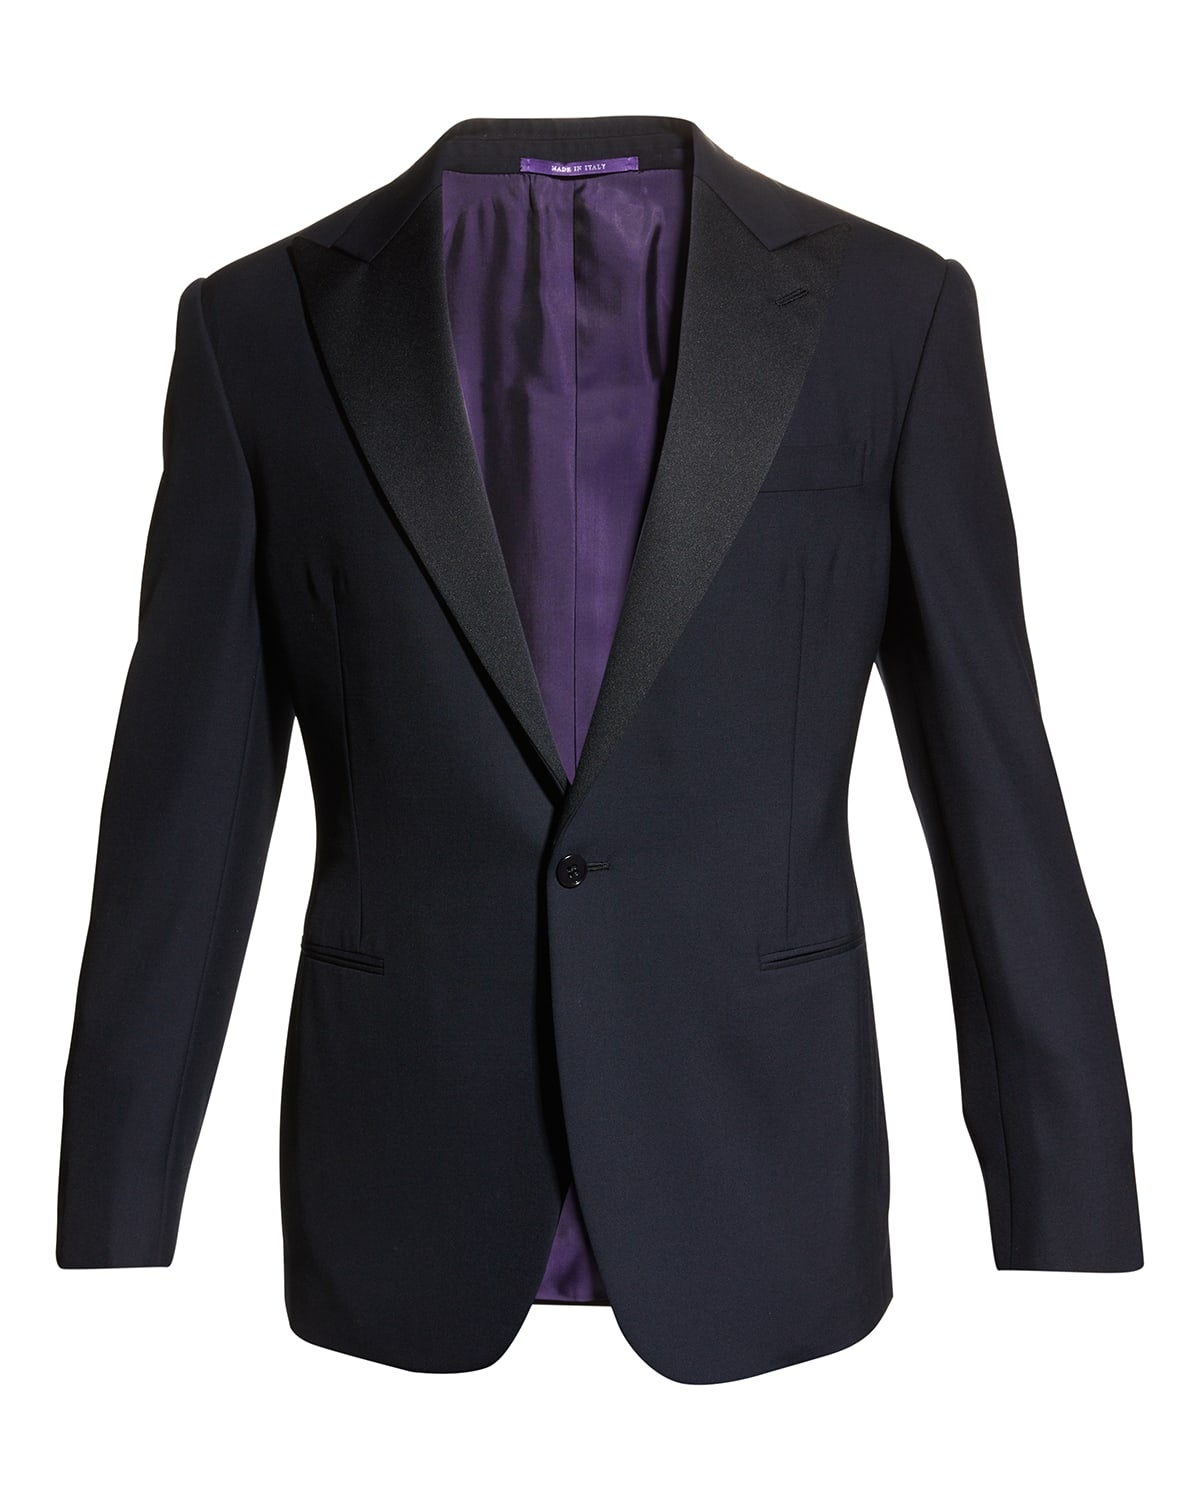 Men's Barathea Solid Wool Tuxedo - 3